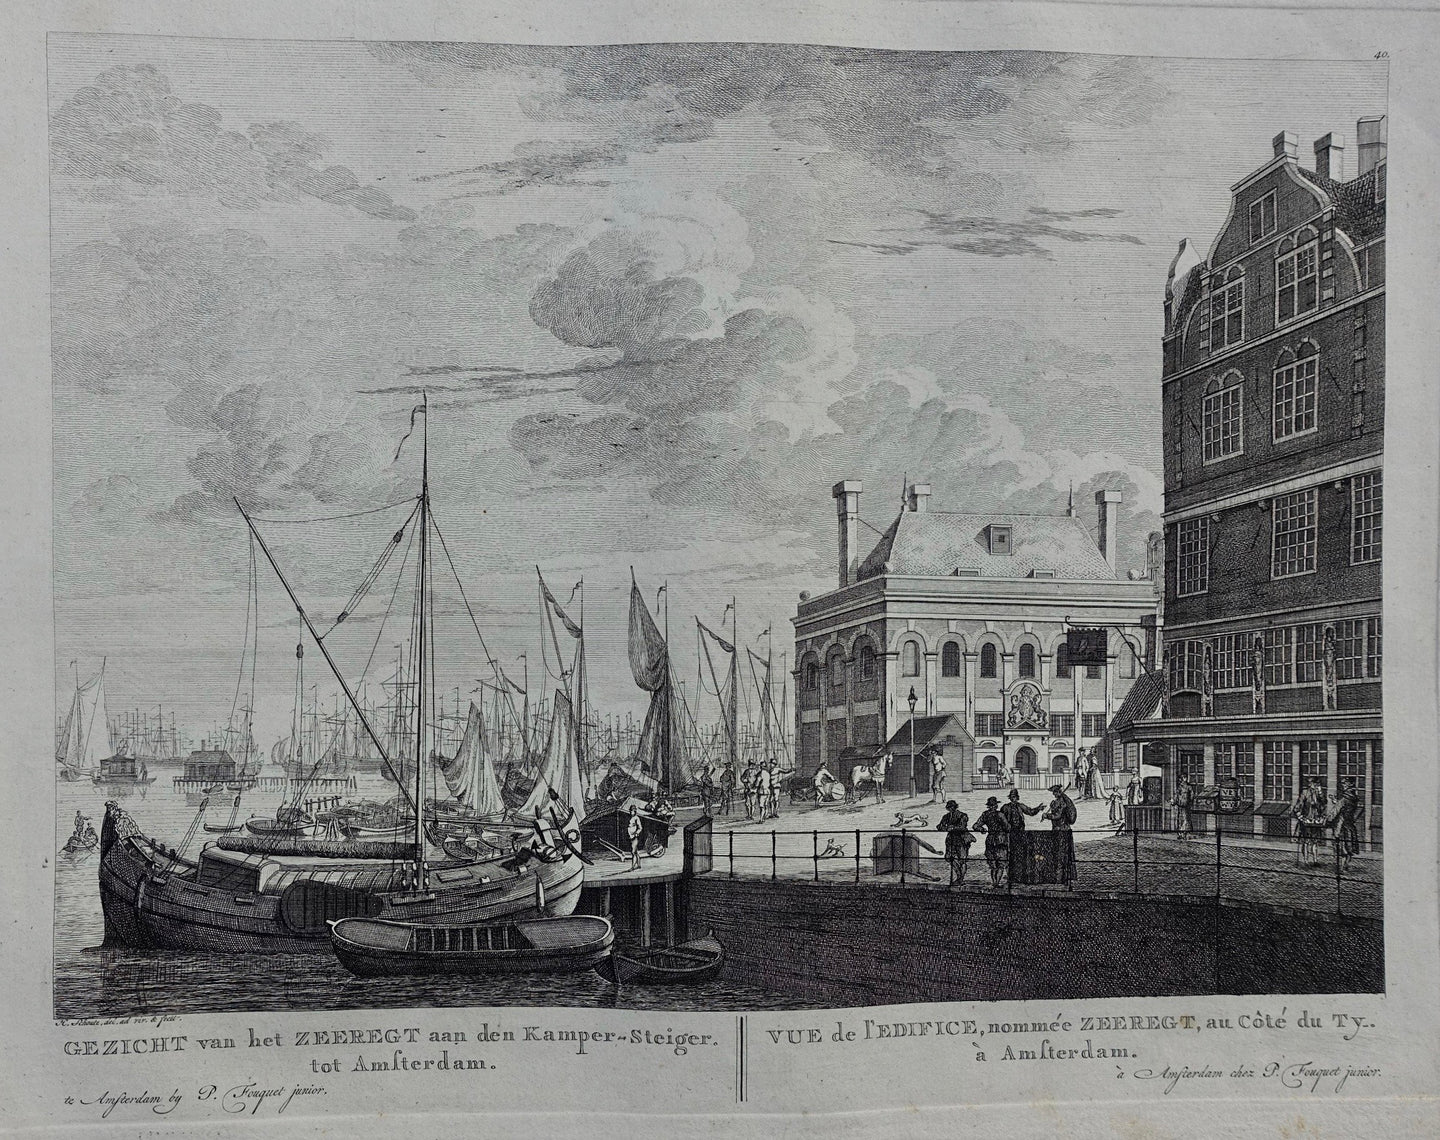 Amsterdam Prins Hendrikkade Zeeregt Kampersteiger - P Fouquet - 1783